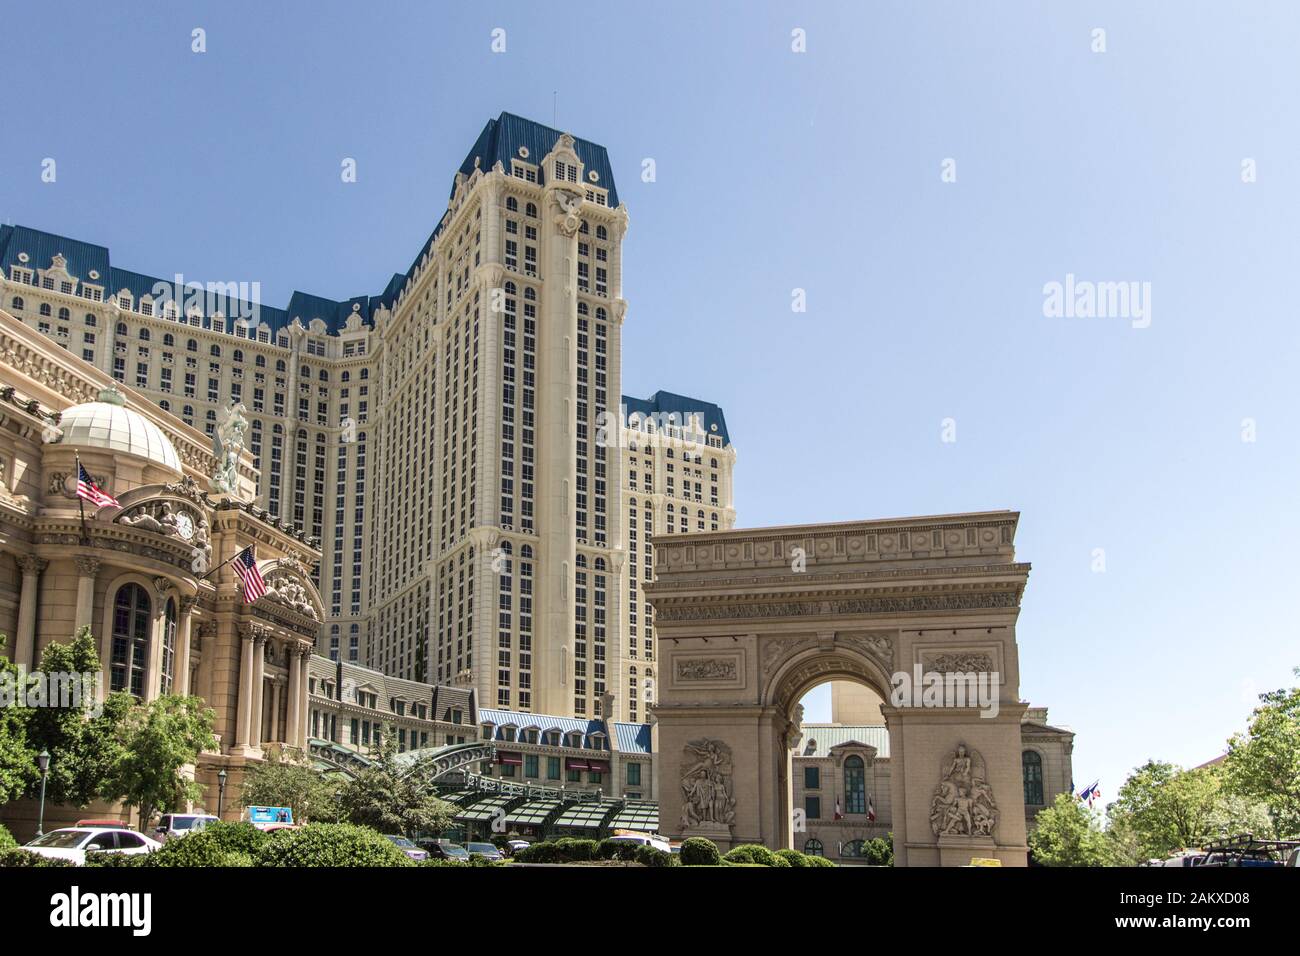 Las Vegas, Nevada, USA - Exterior of the Paris Casino and resort on the center portion of the Las Vegas strip. Stock Photo